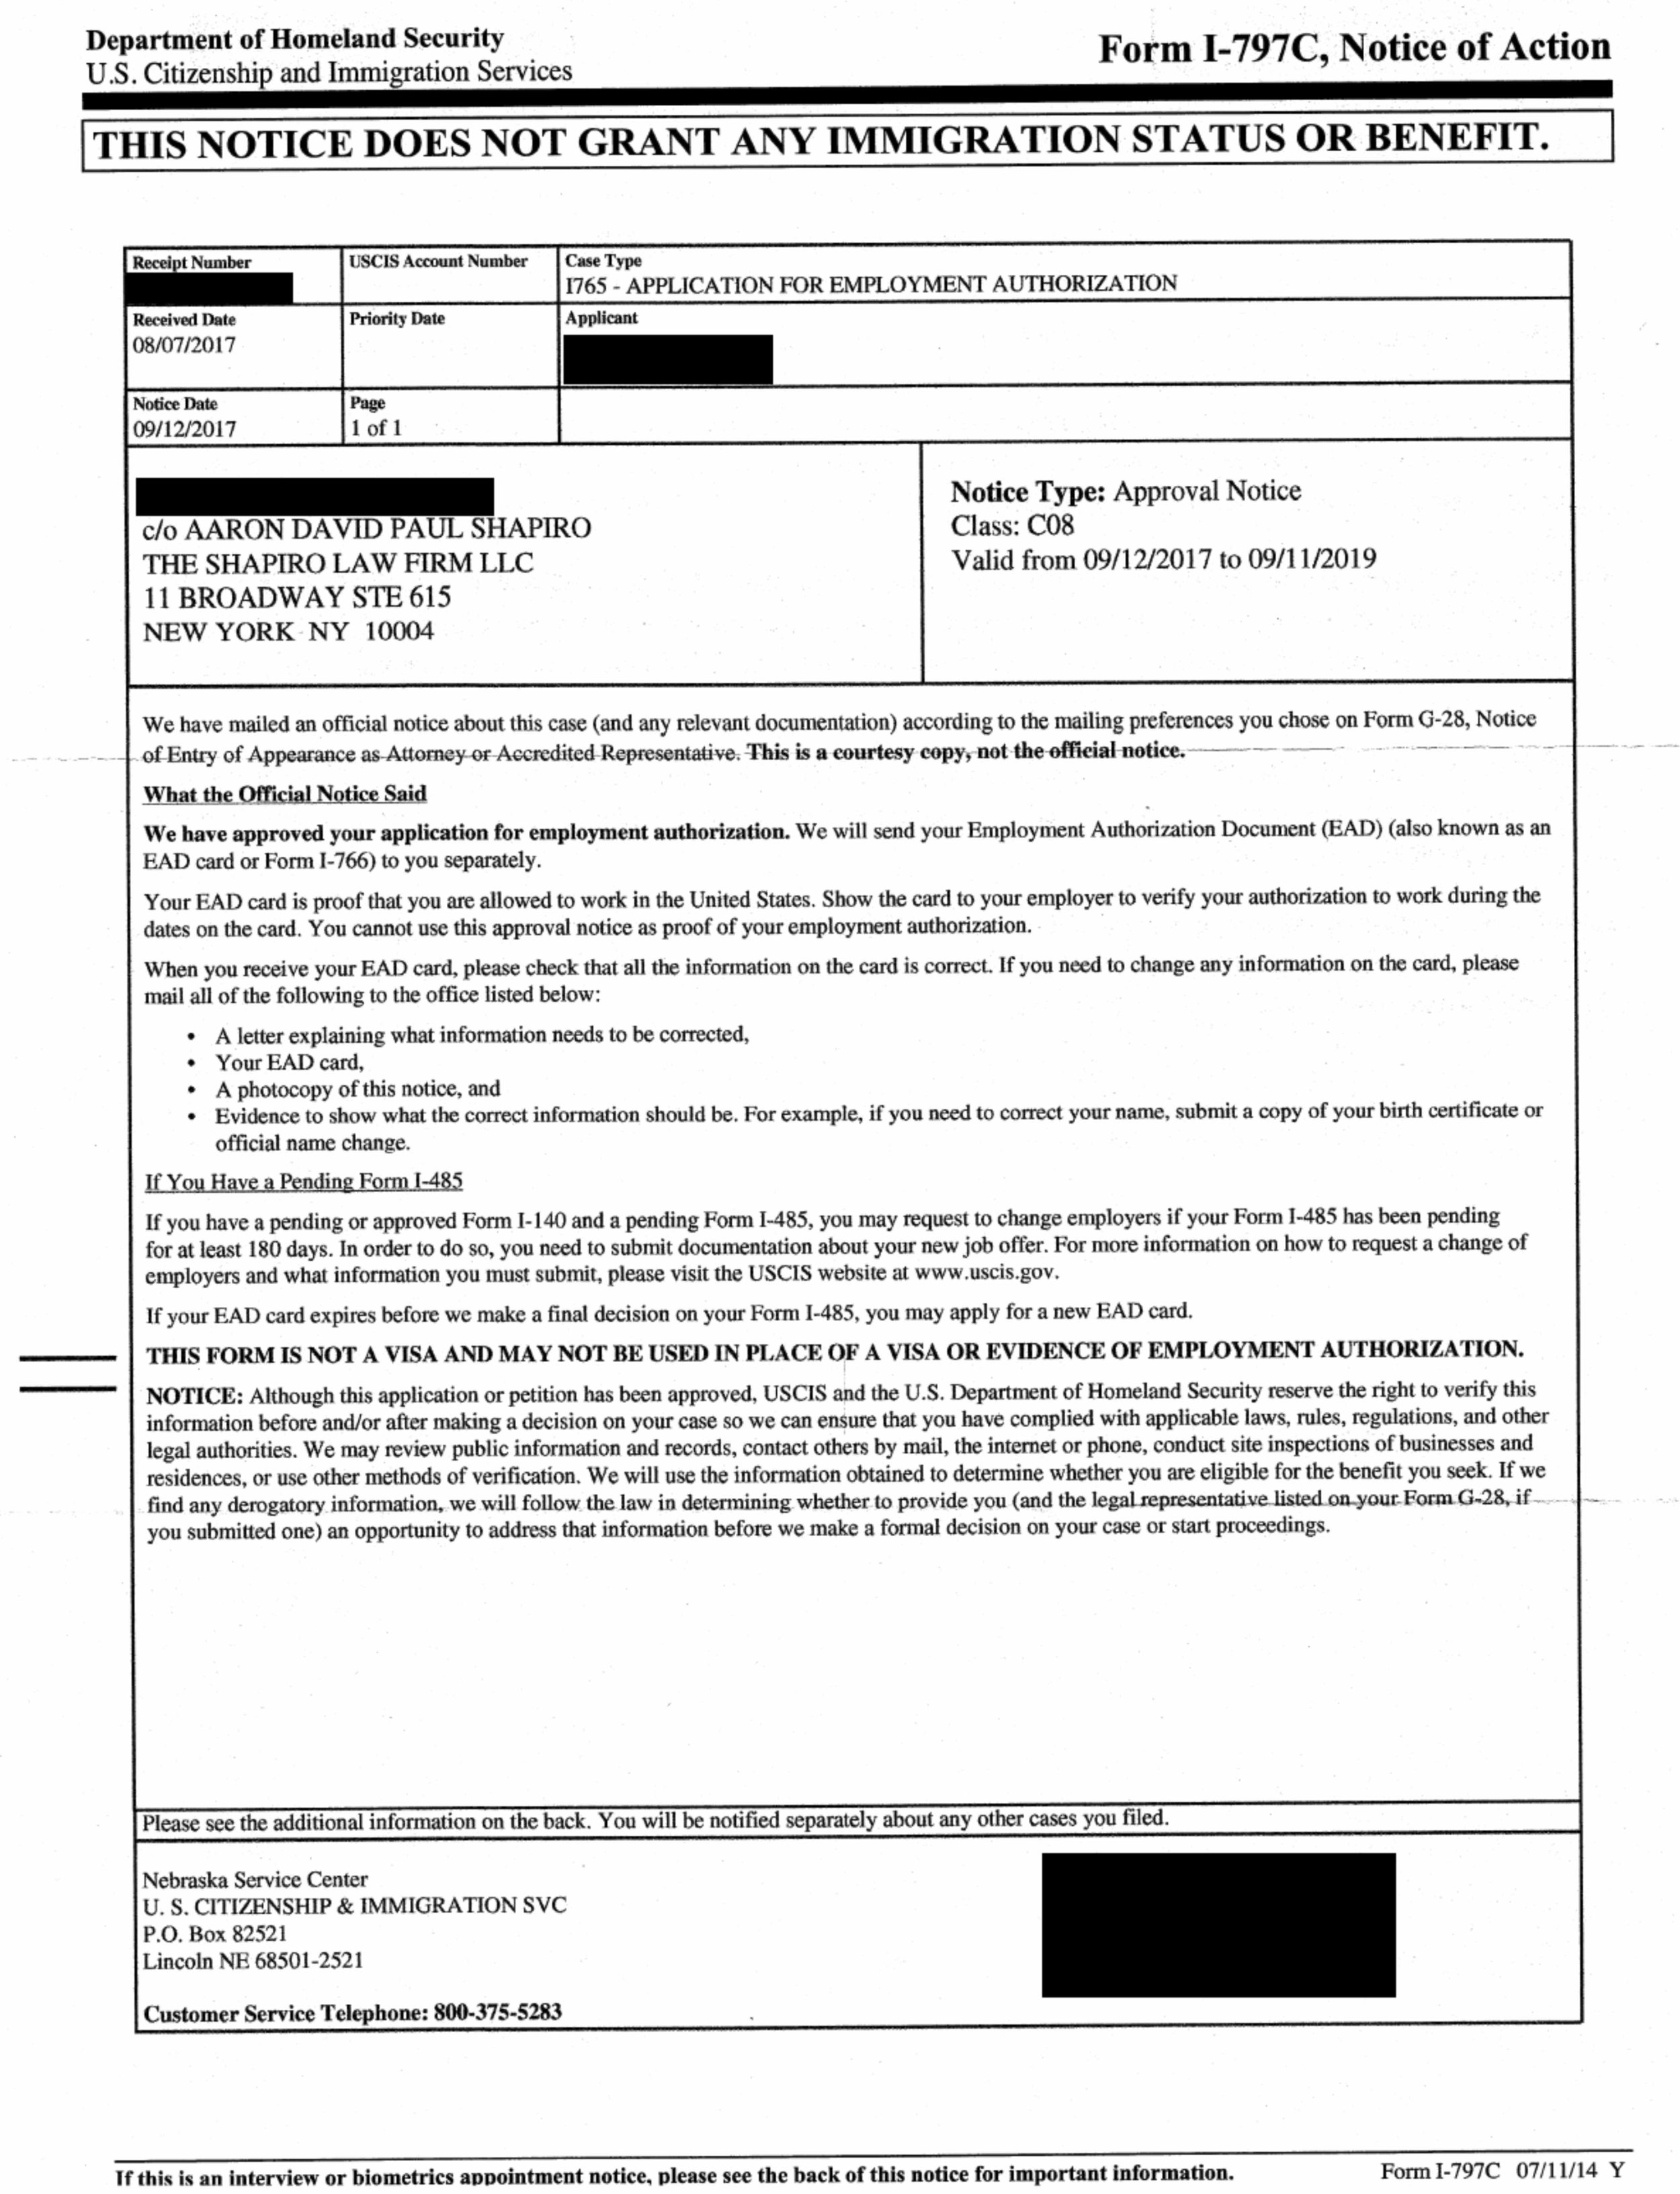 Form I-797C, I-765 Approval Notice